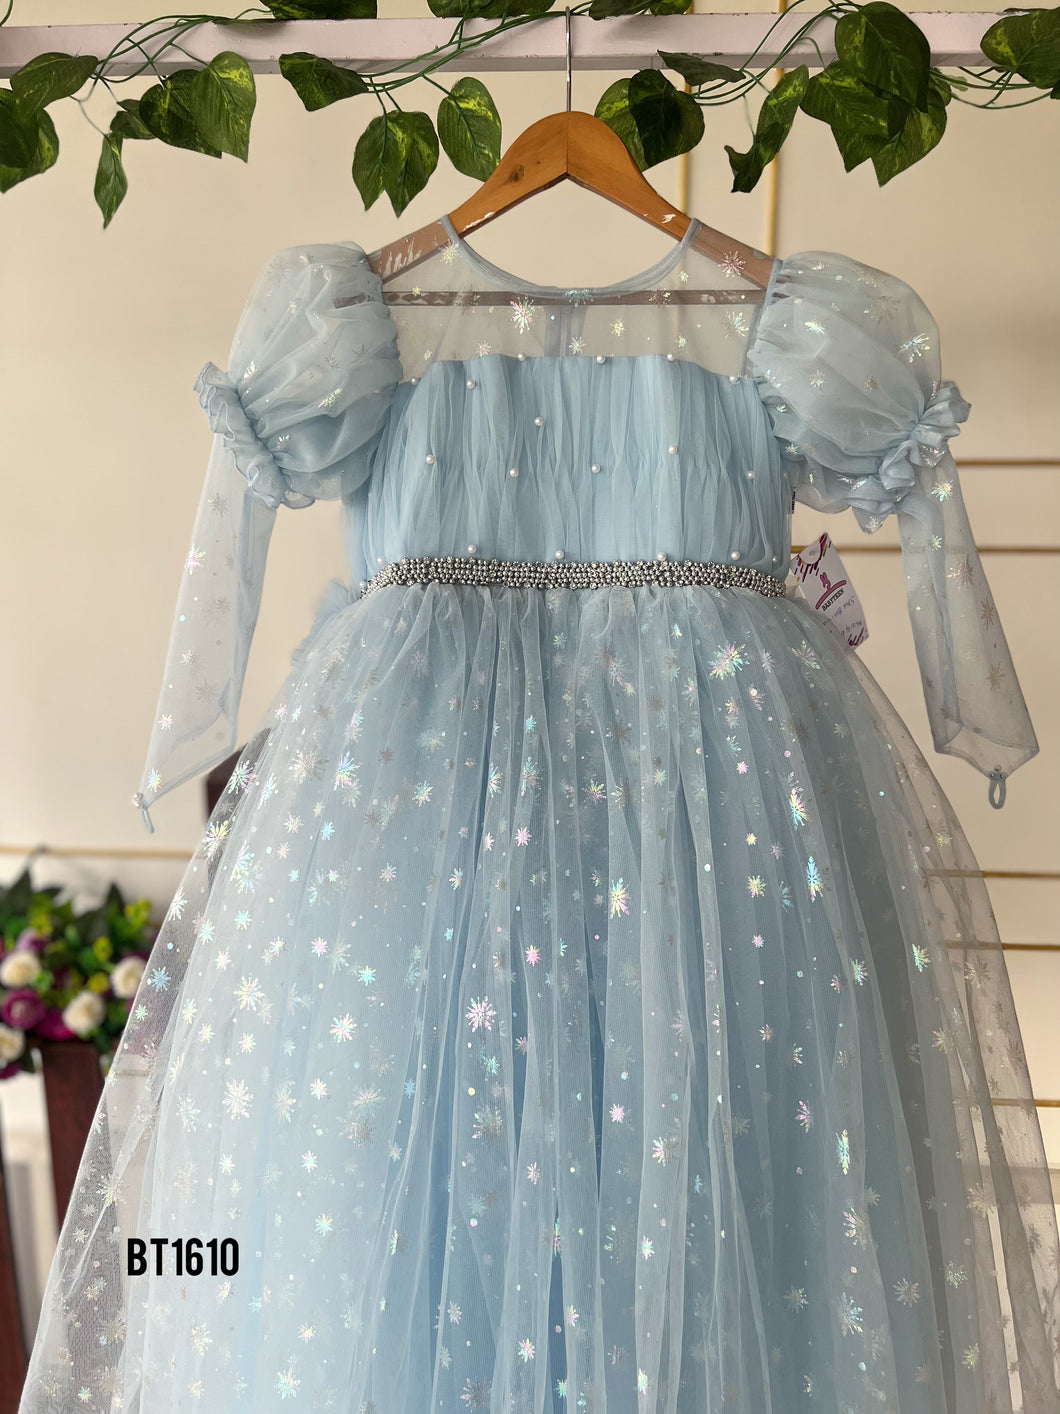 BT1610 Celestial Twinkle Dress – A Sky Full of Stars